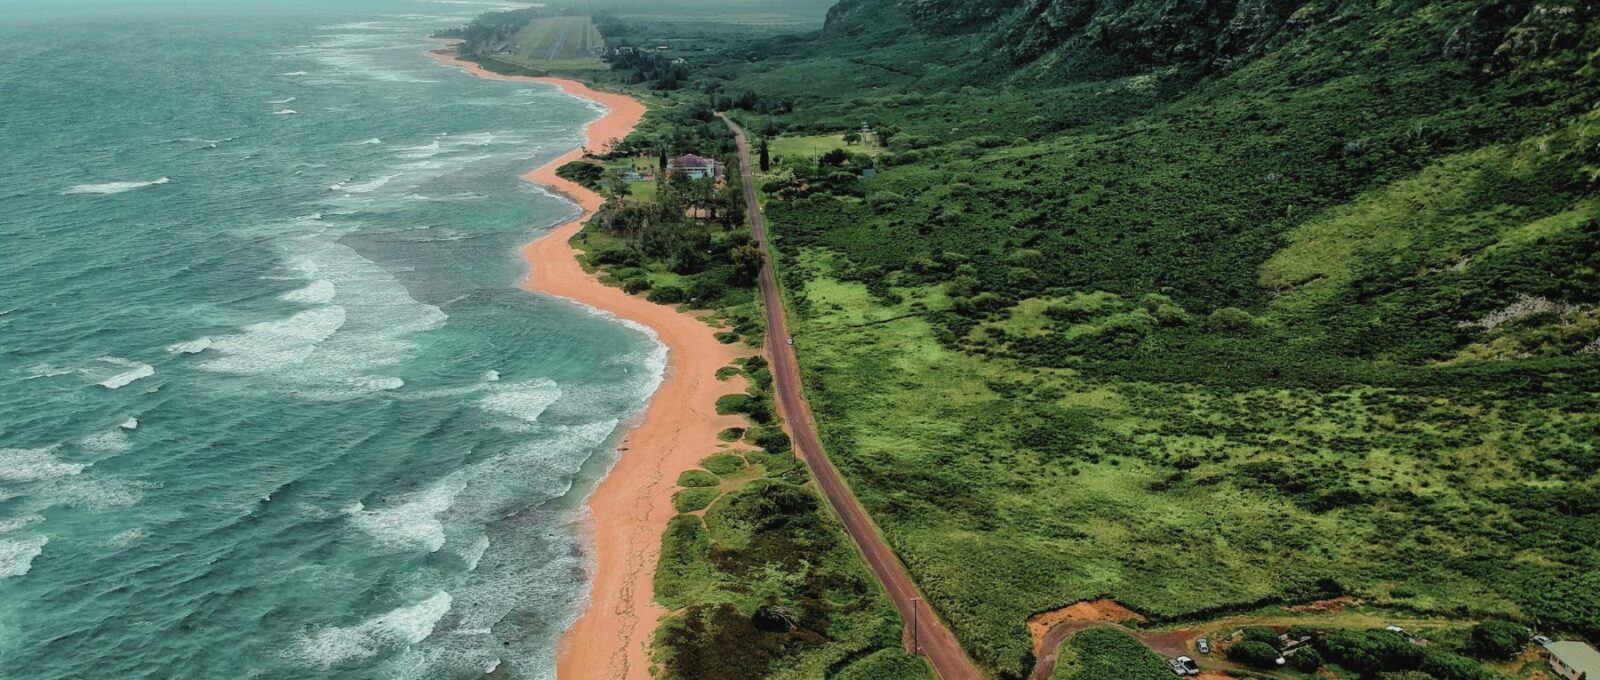 north shore oahu hawaii